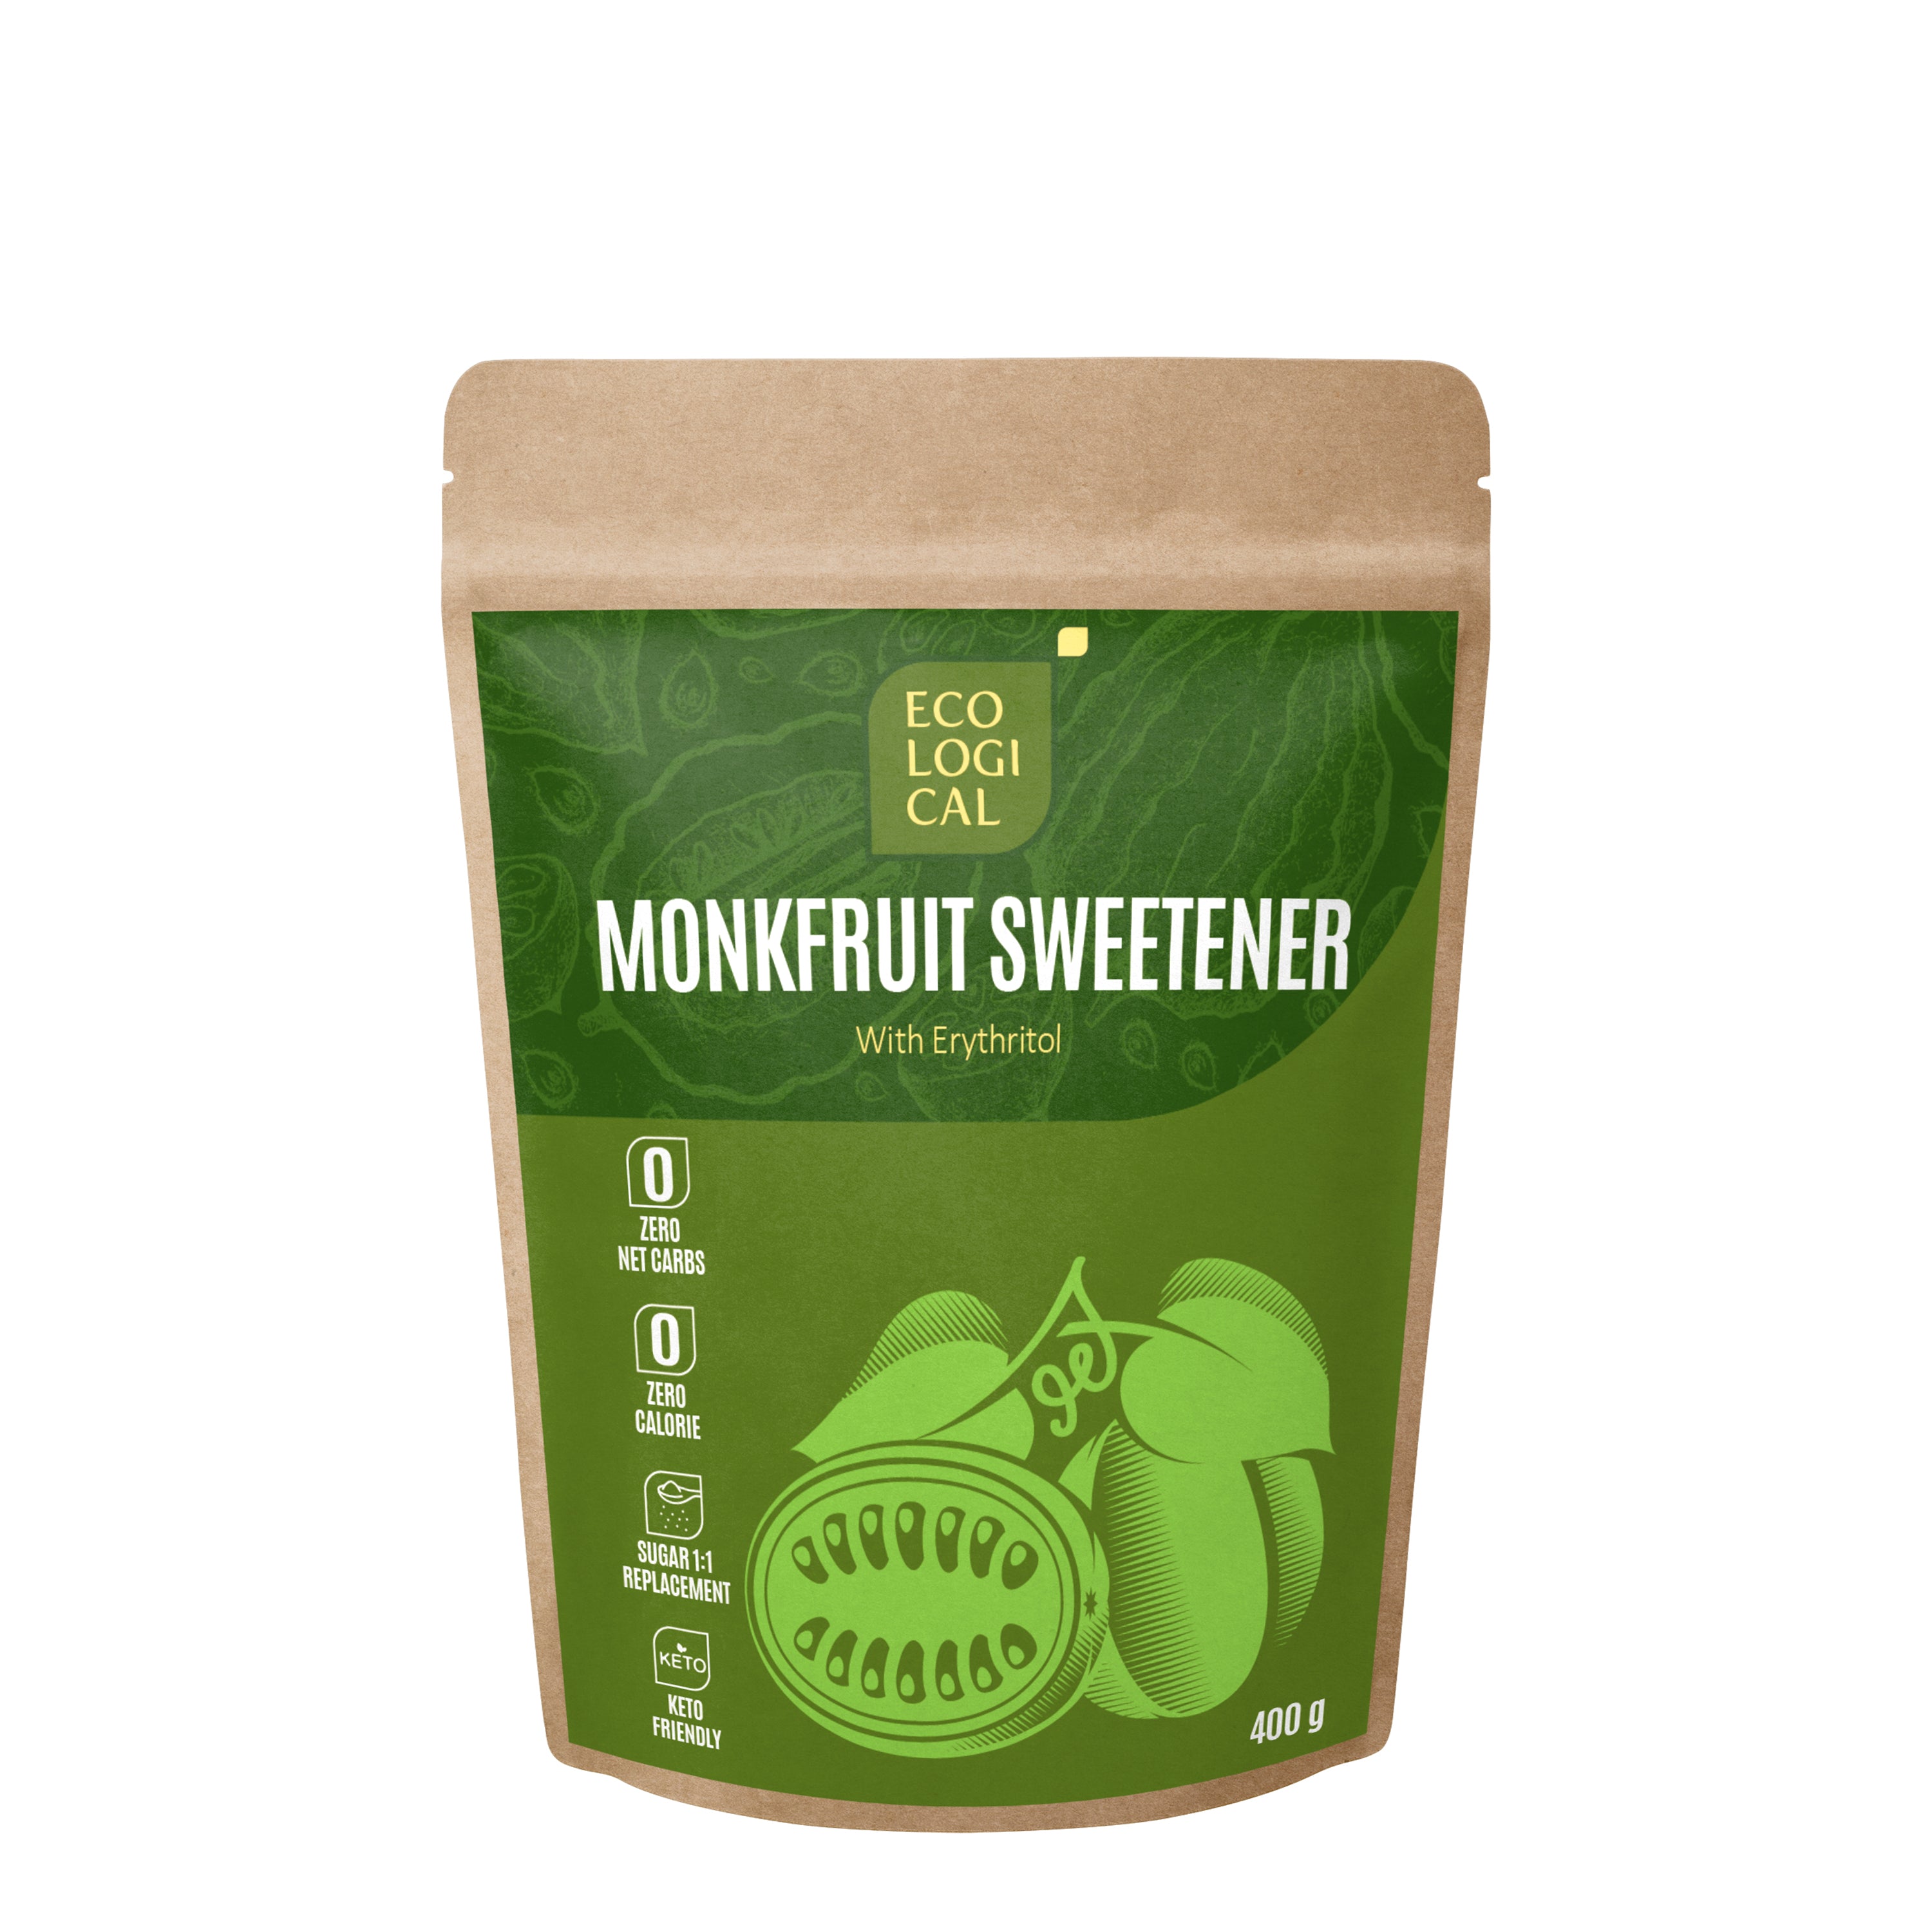 ECOLOGICAL Monkfruit Sweetener, 400g - With Erythritol